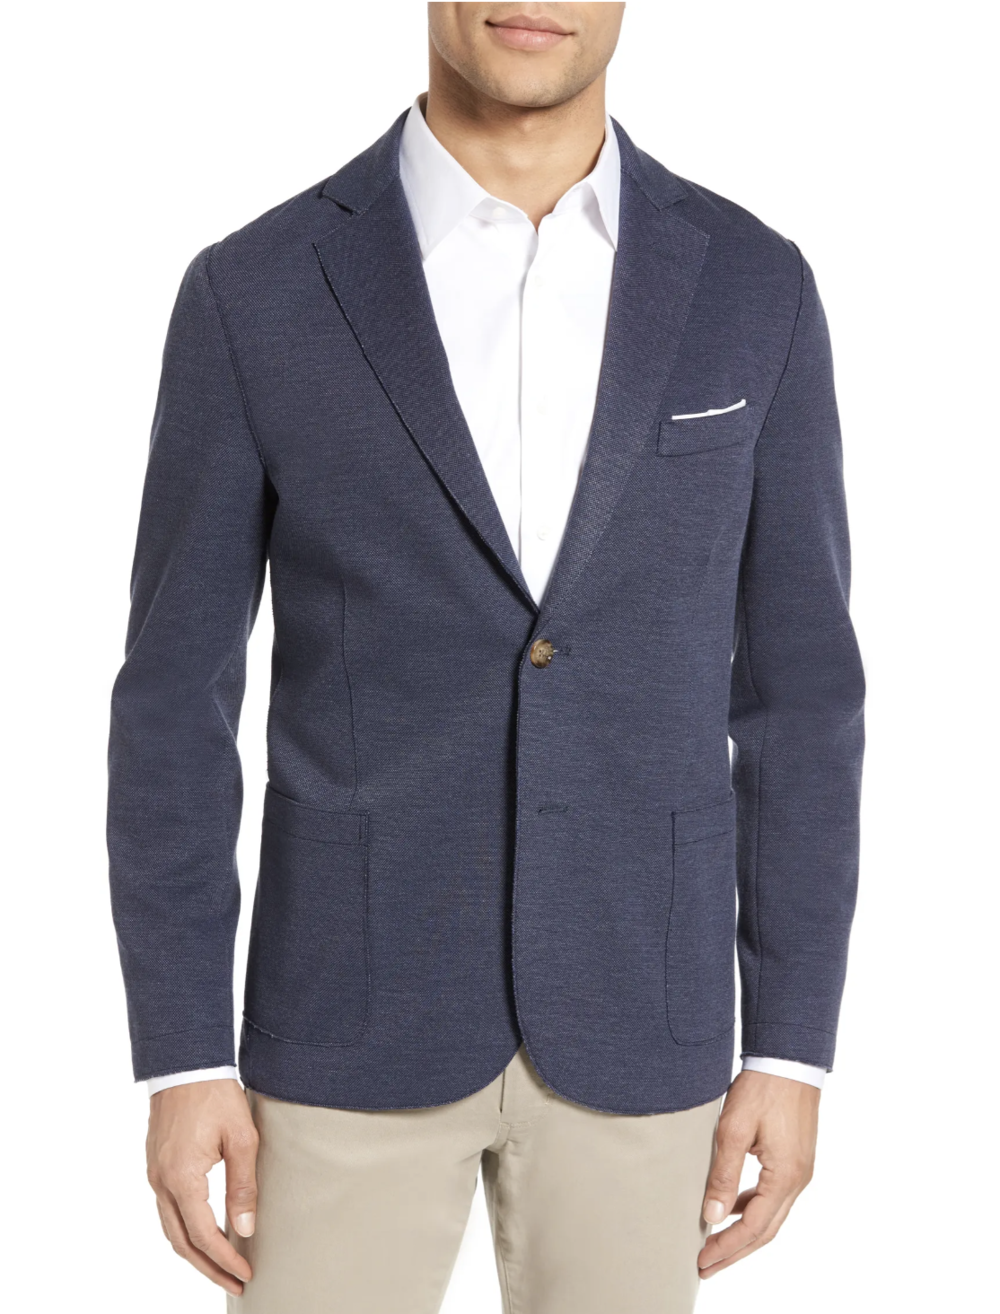 Men's Jersey Blazer by Eleventy, $695